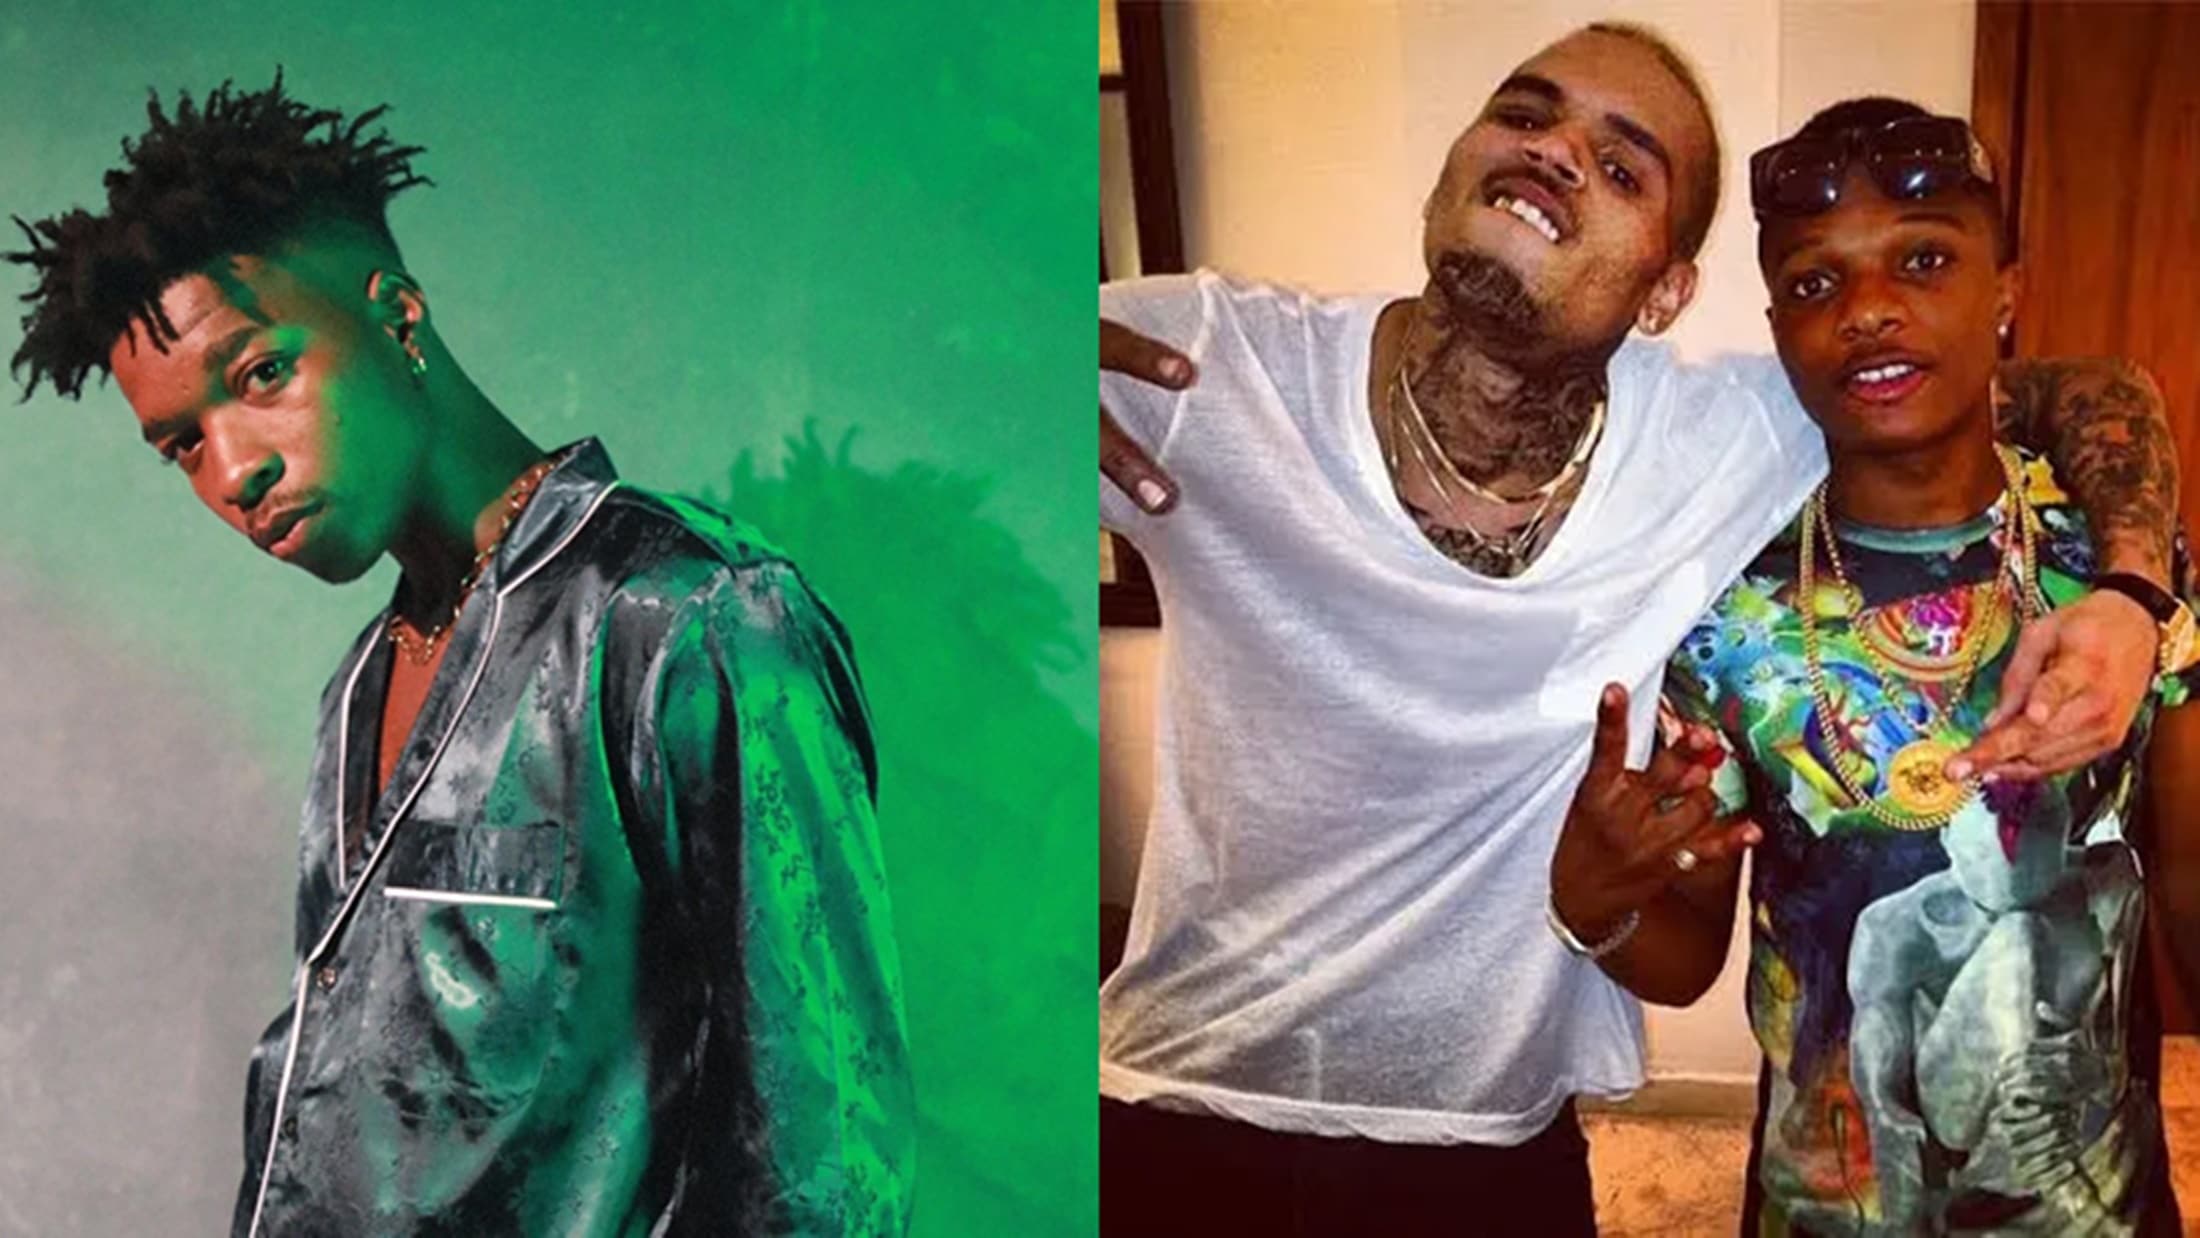 Magixx slams Wizkid’s song with Chris Brown